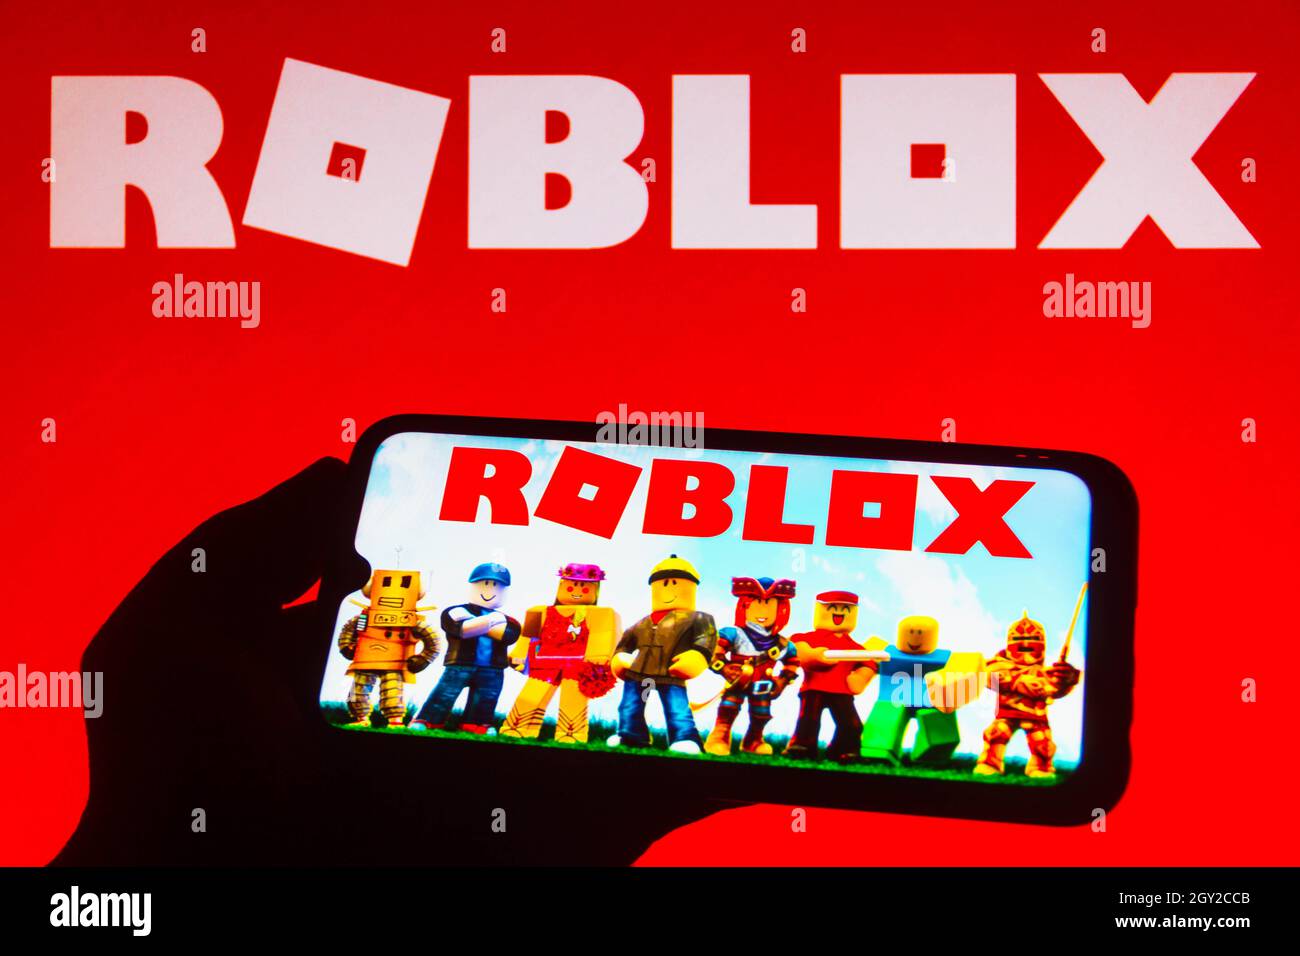 Pixilart - New ROBLOX Logo by ItsTrippin